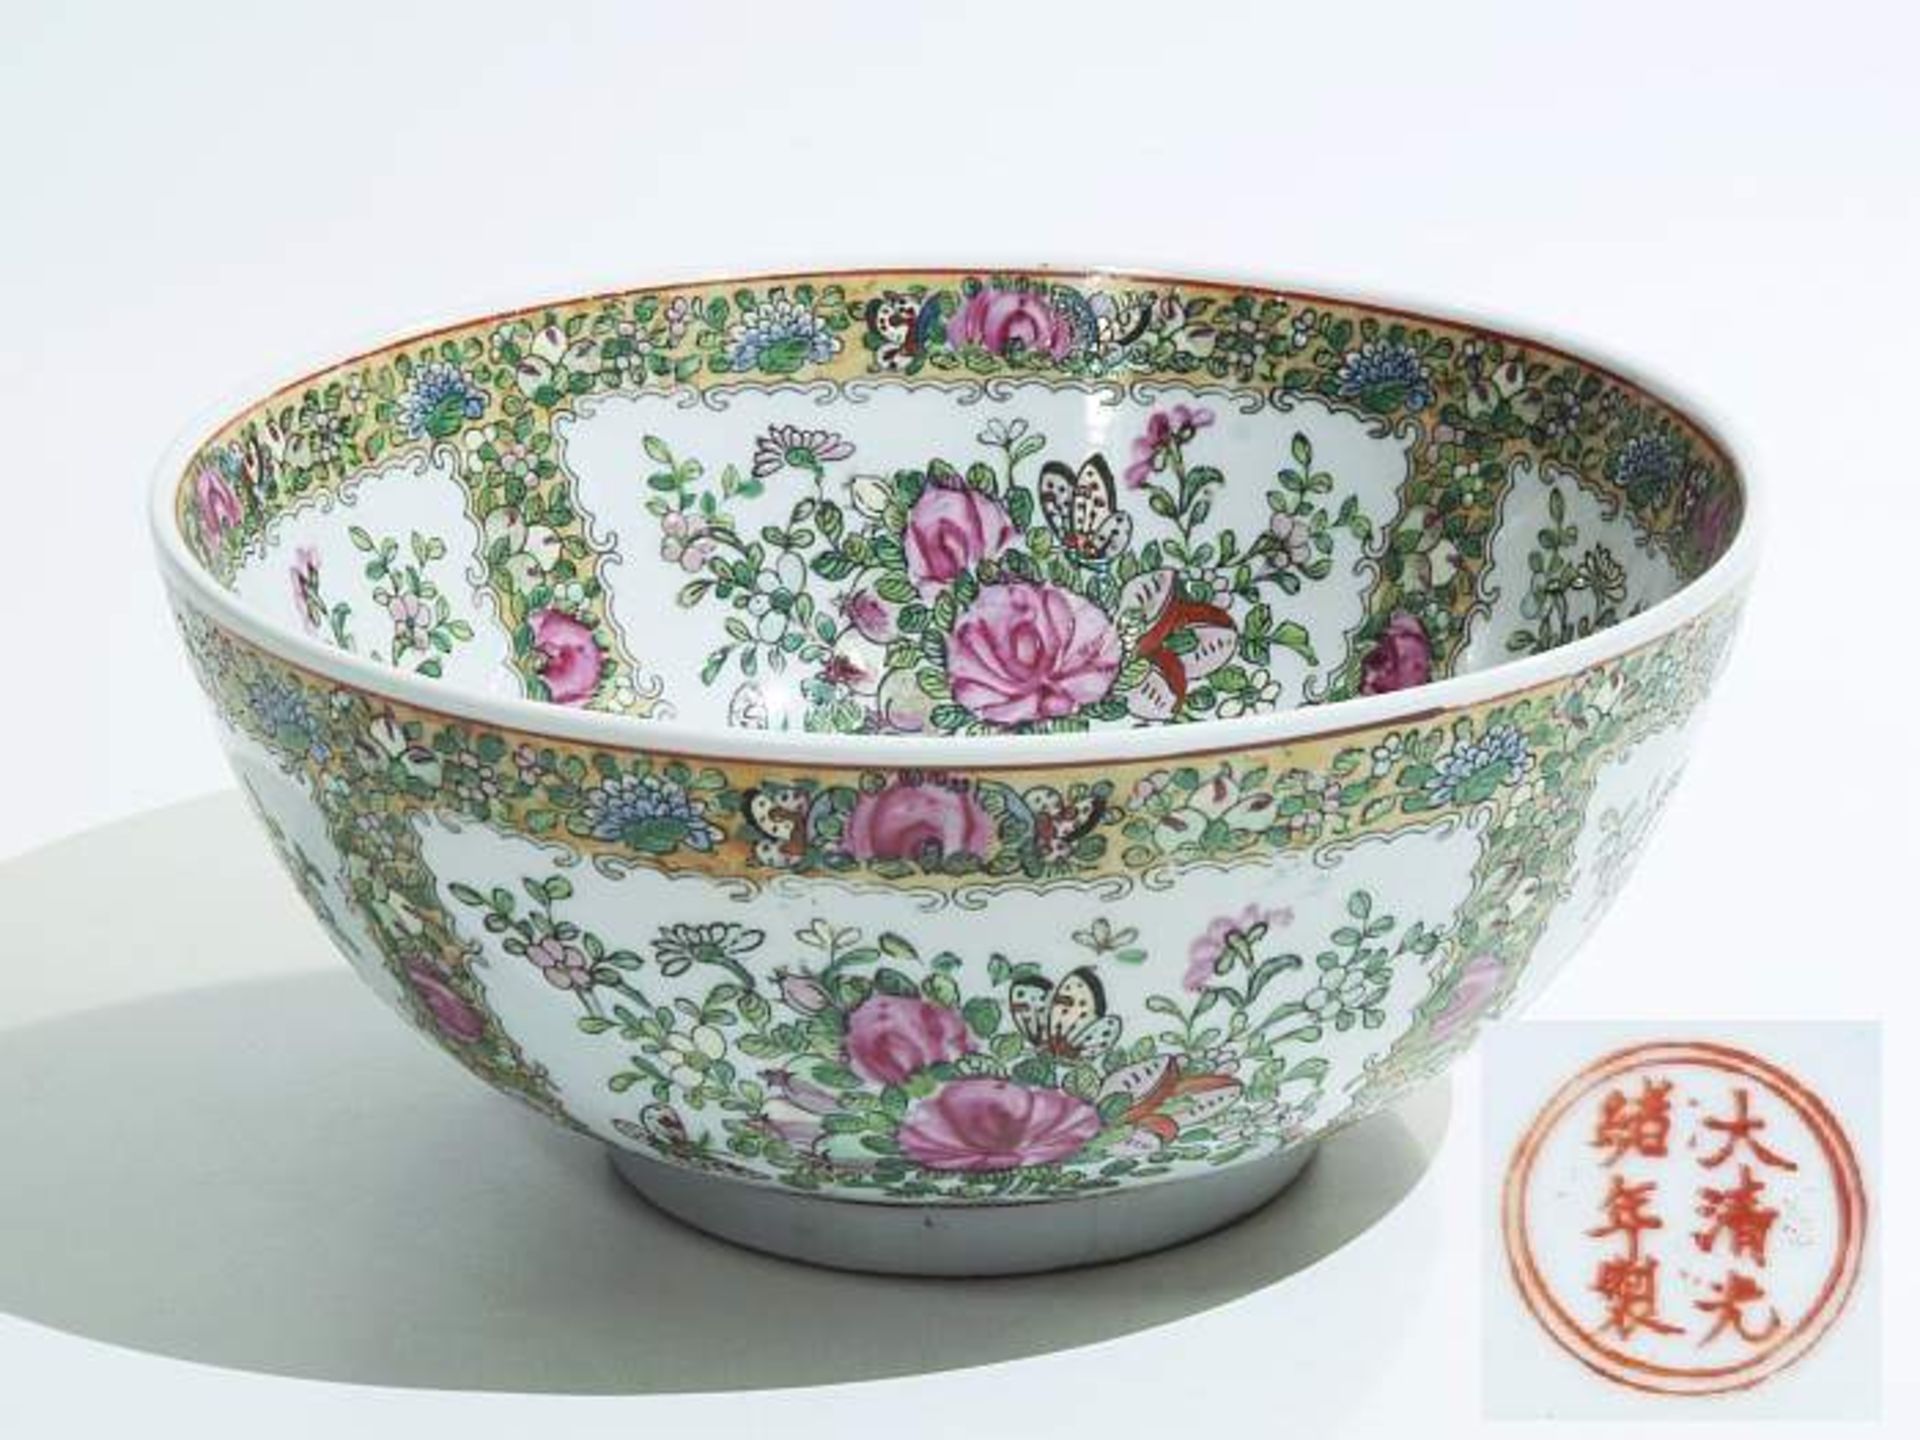 Schale Famille Rose.
Schale Famille Rose.   China, 20 Jh.  Porzellan,  Dekor floral in den Farben